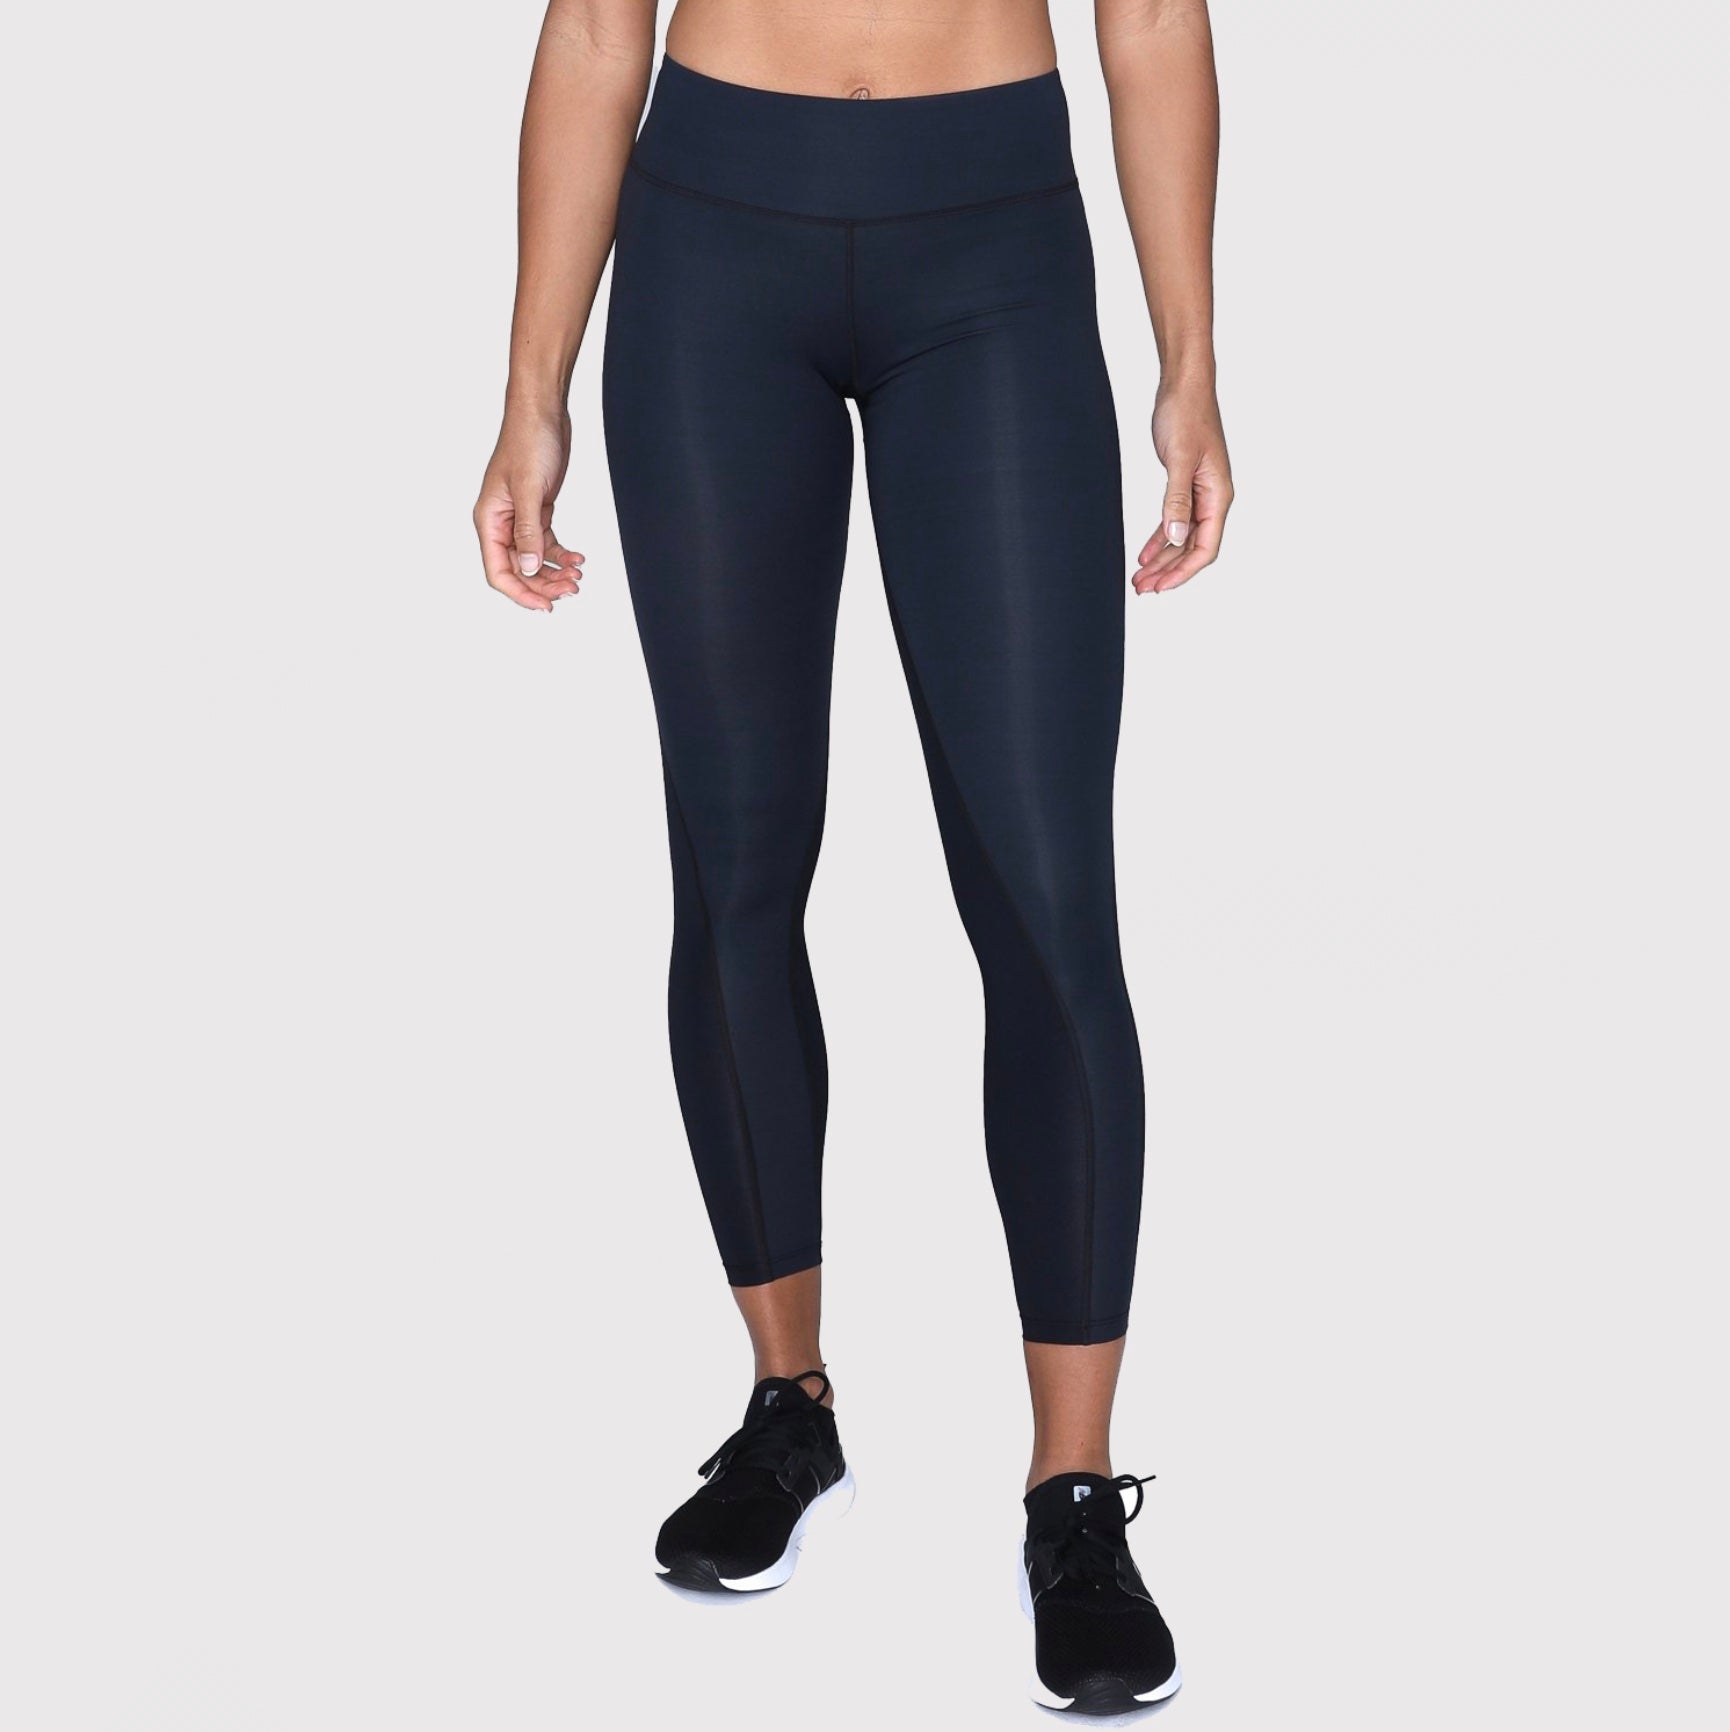 Nike One Women's Mid-Rise 7/8 Leggings XXL plus size new